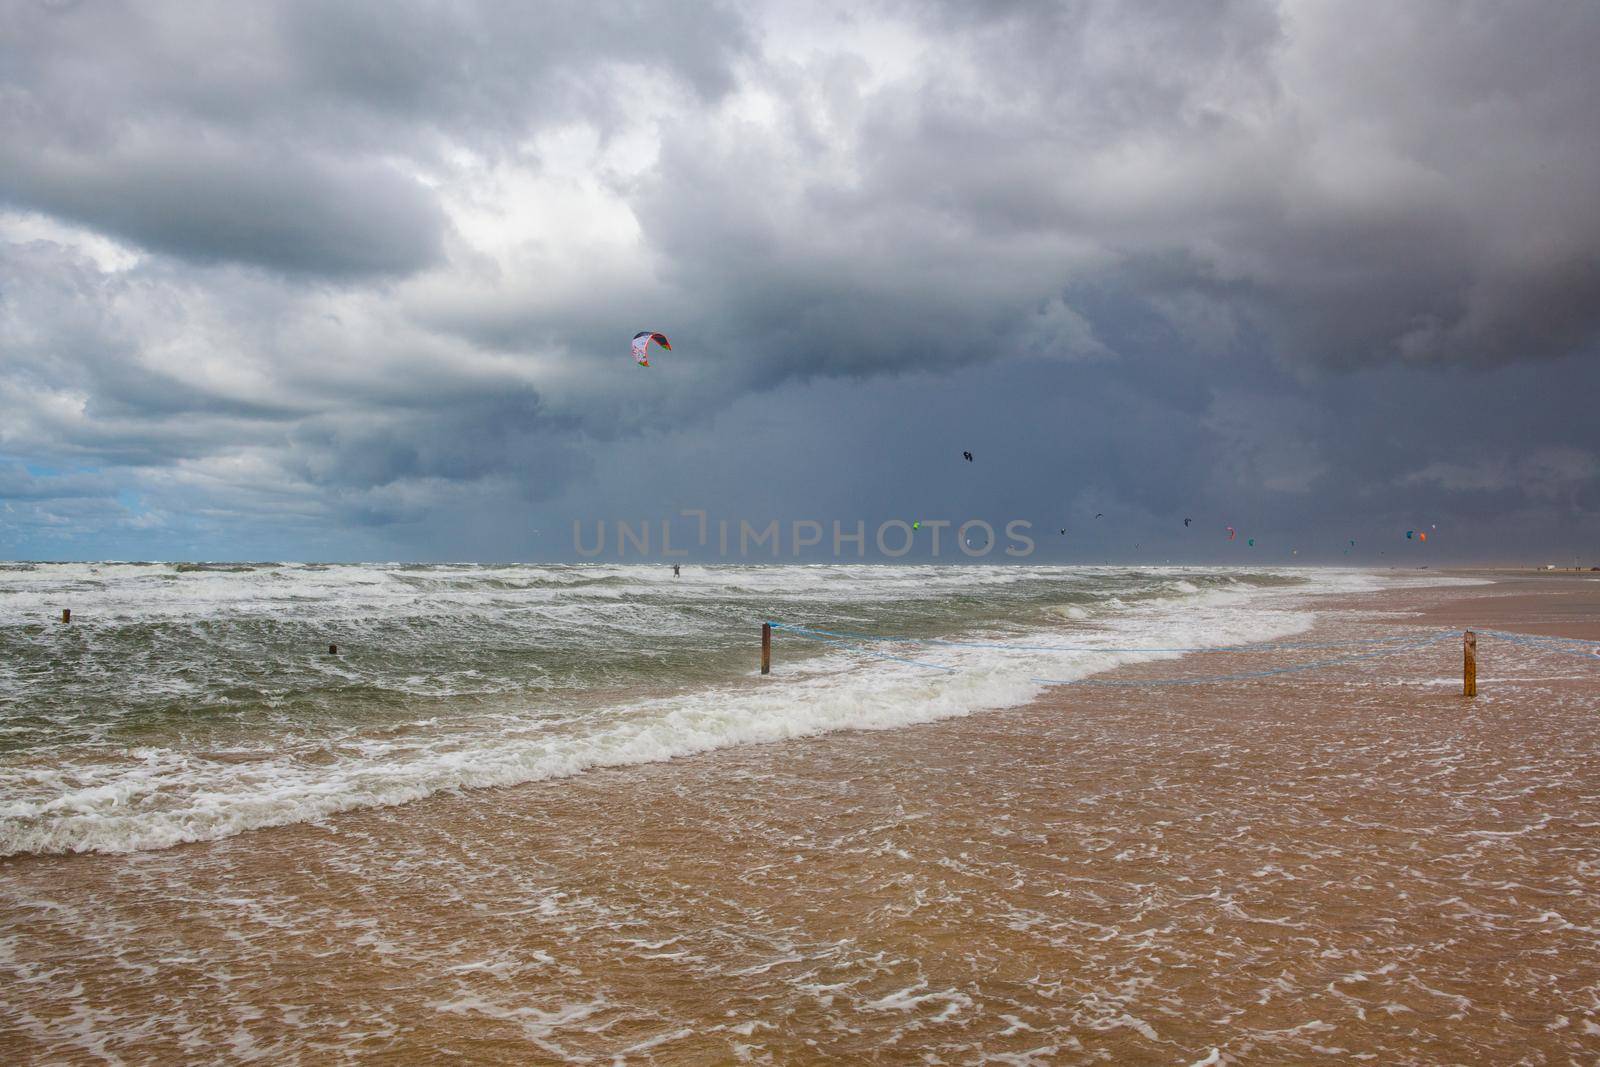 Favourite Lakolk beach for kiteboarding, surfing etc. Jutland, Denmark by CaptureLight